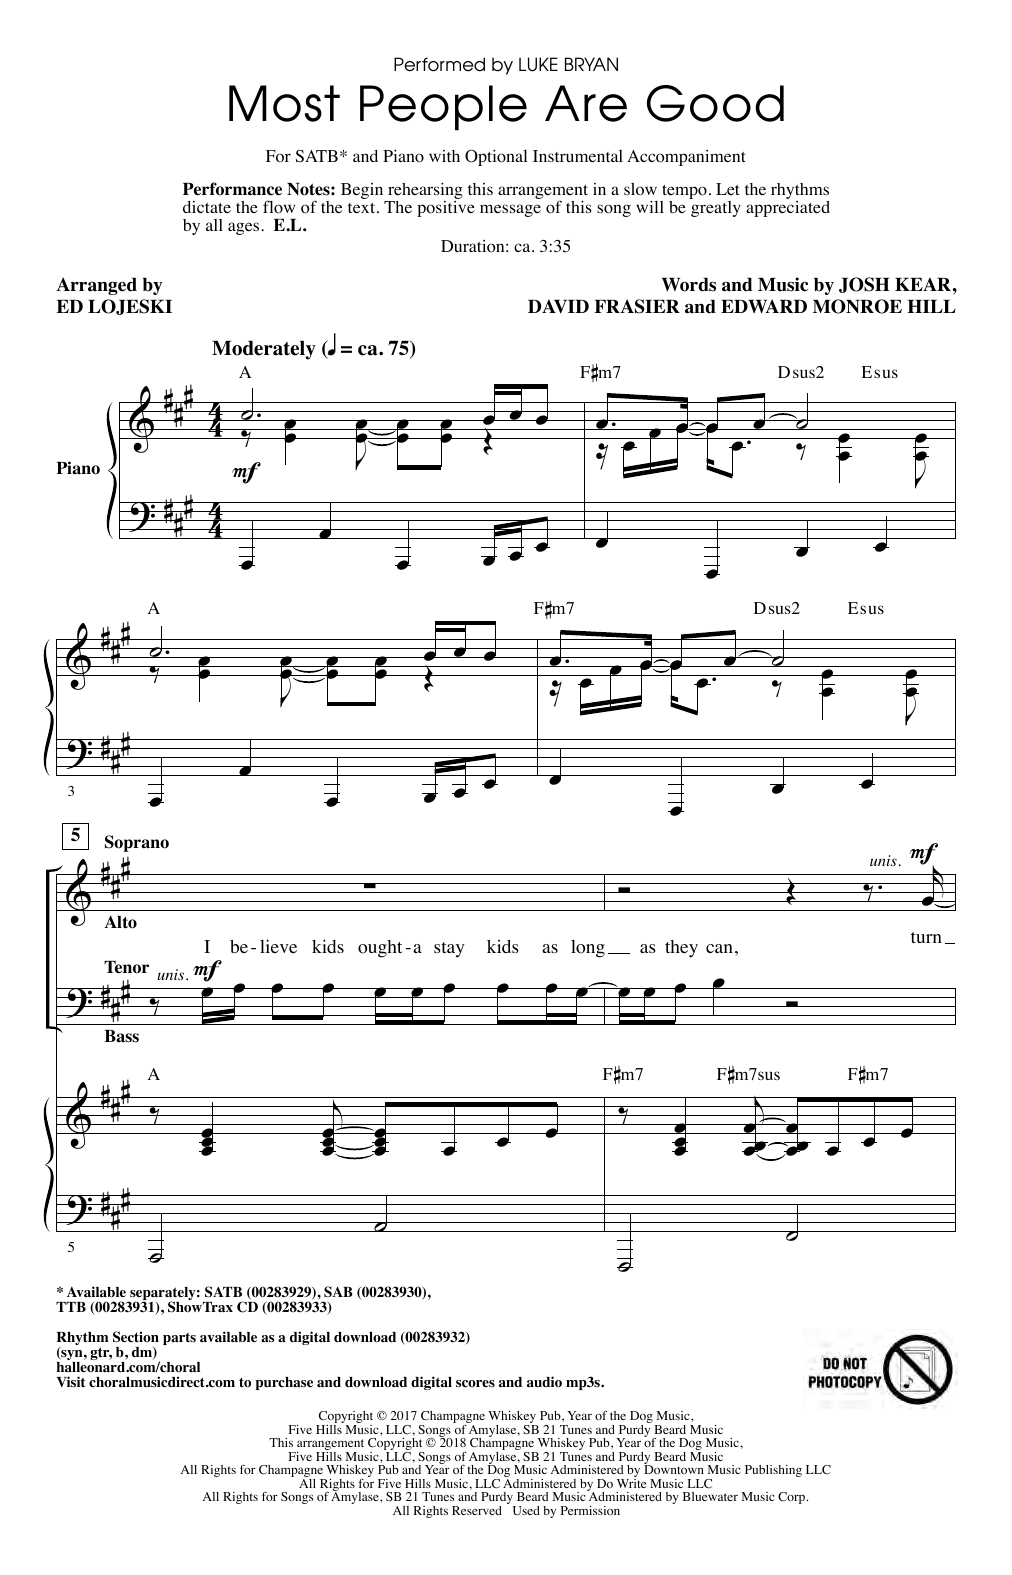 Luke Bryan Most People Are Good (arr. Ed Lojeski) Sheet Music Notes & Chords for SAB Choir - Download or Print PDF